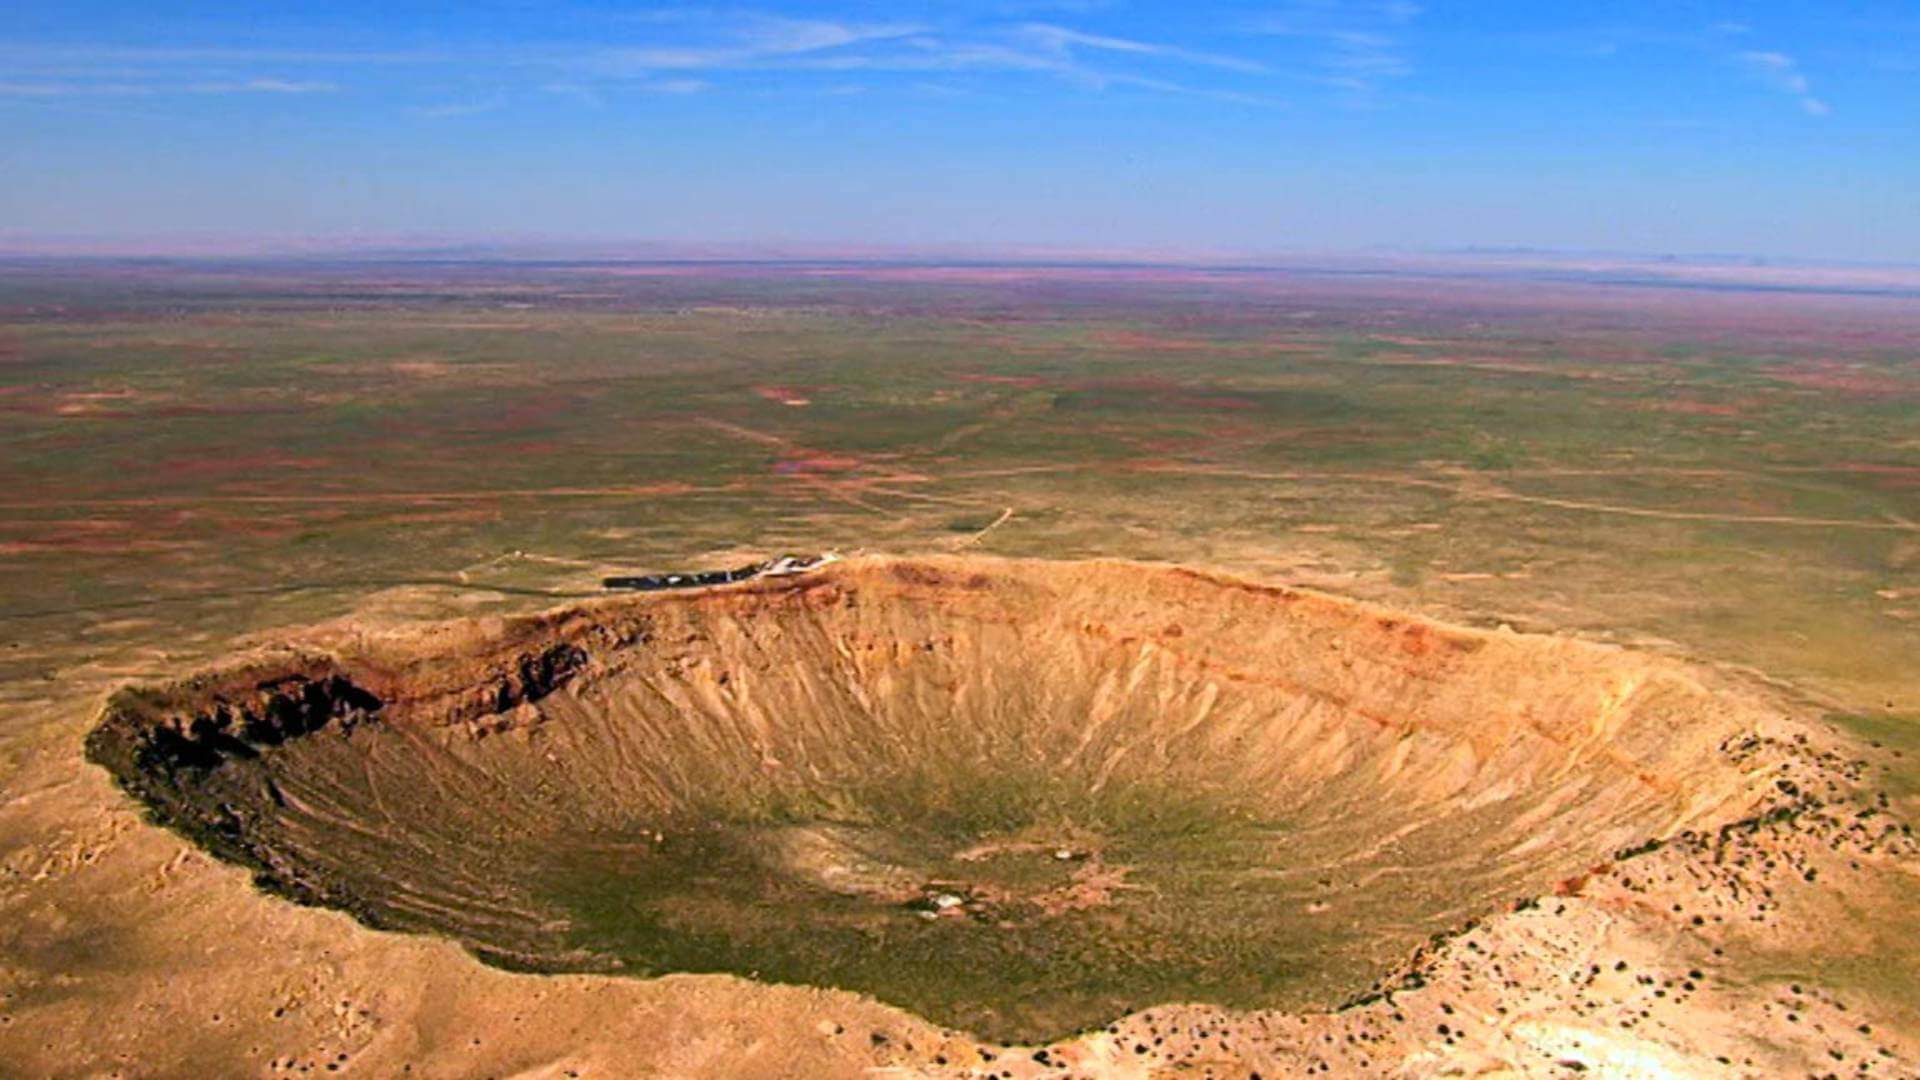 Metepr Crater of Arizona